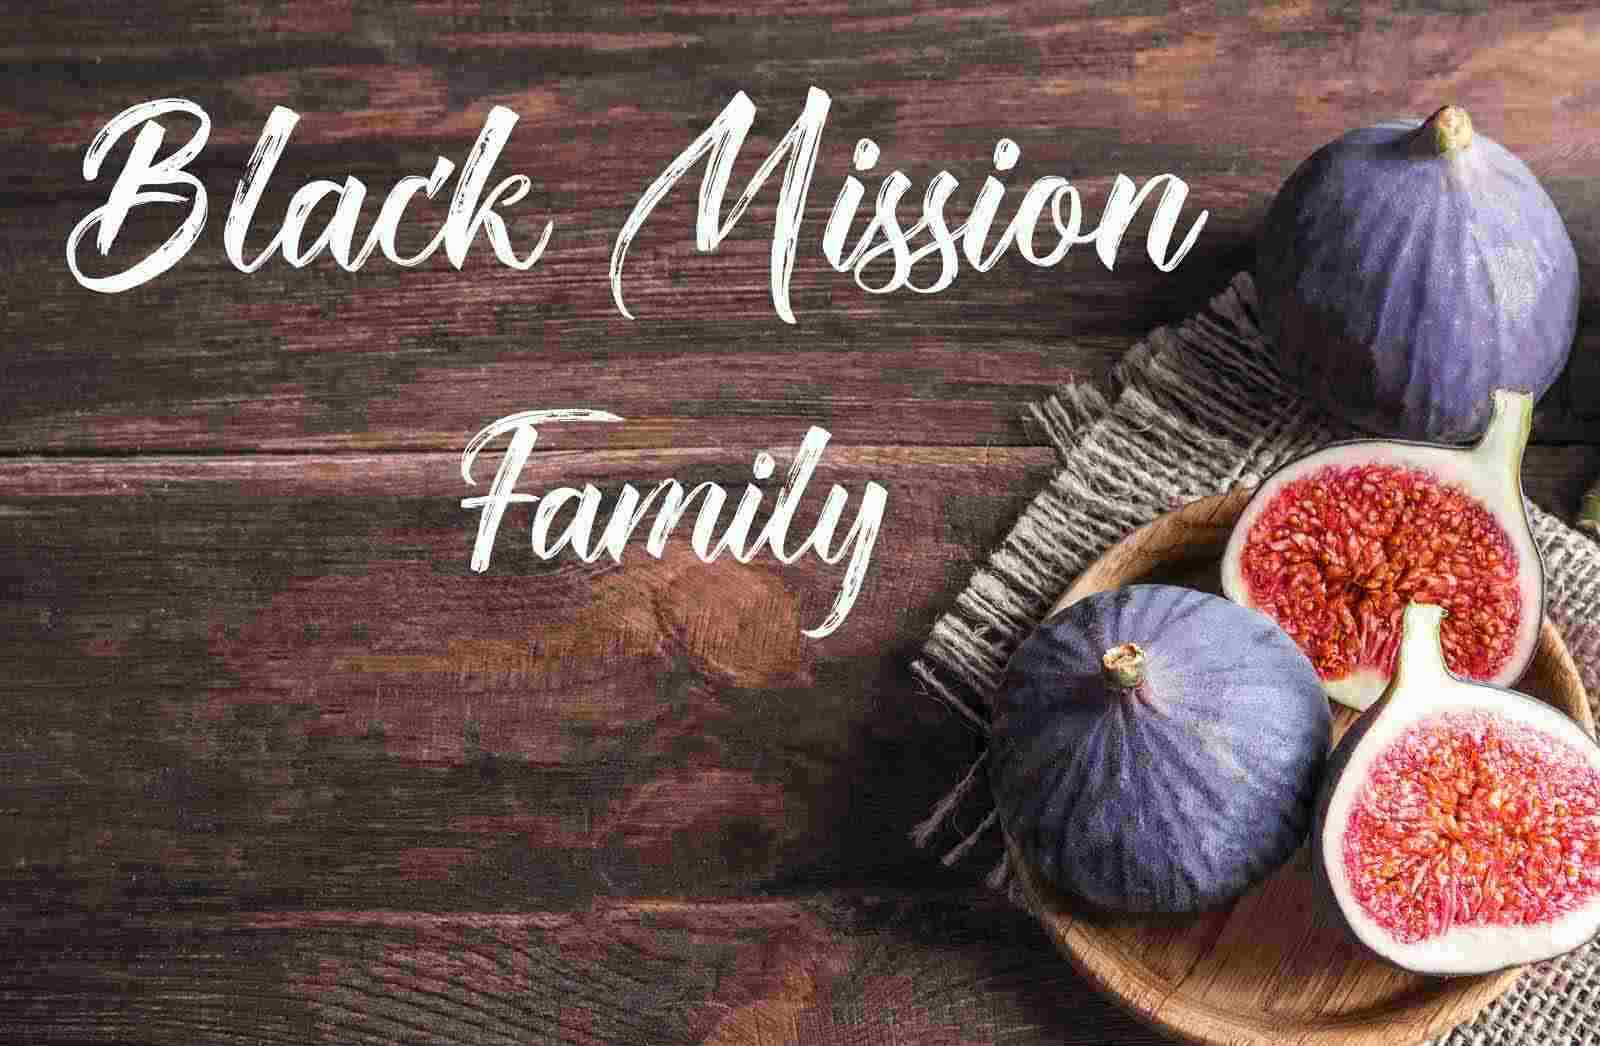 Black Mission Family